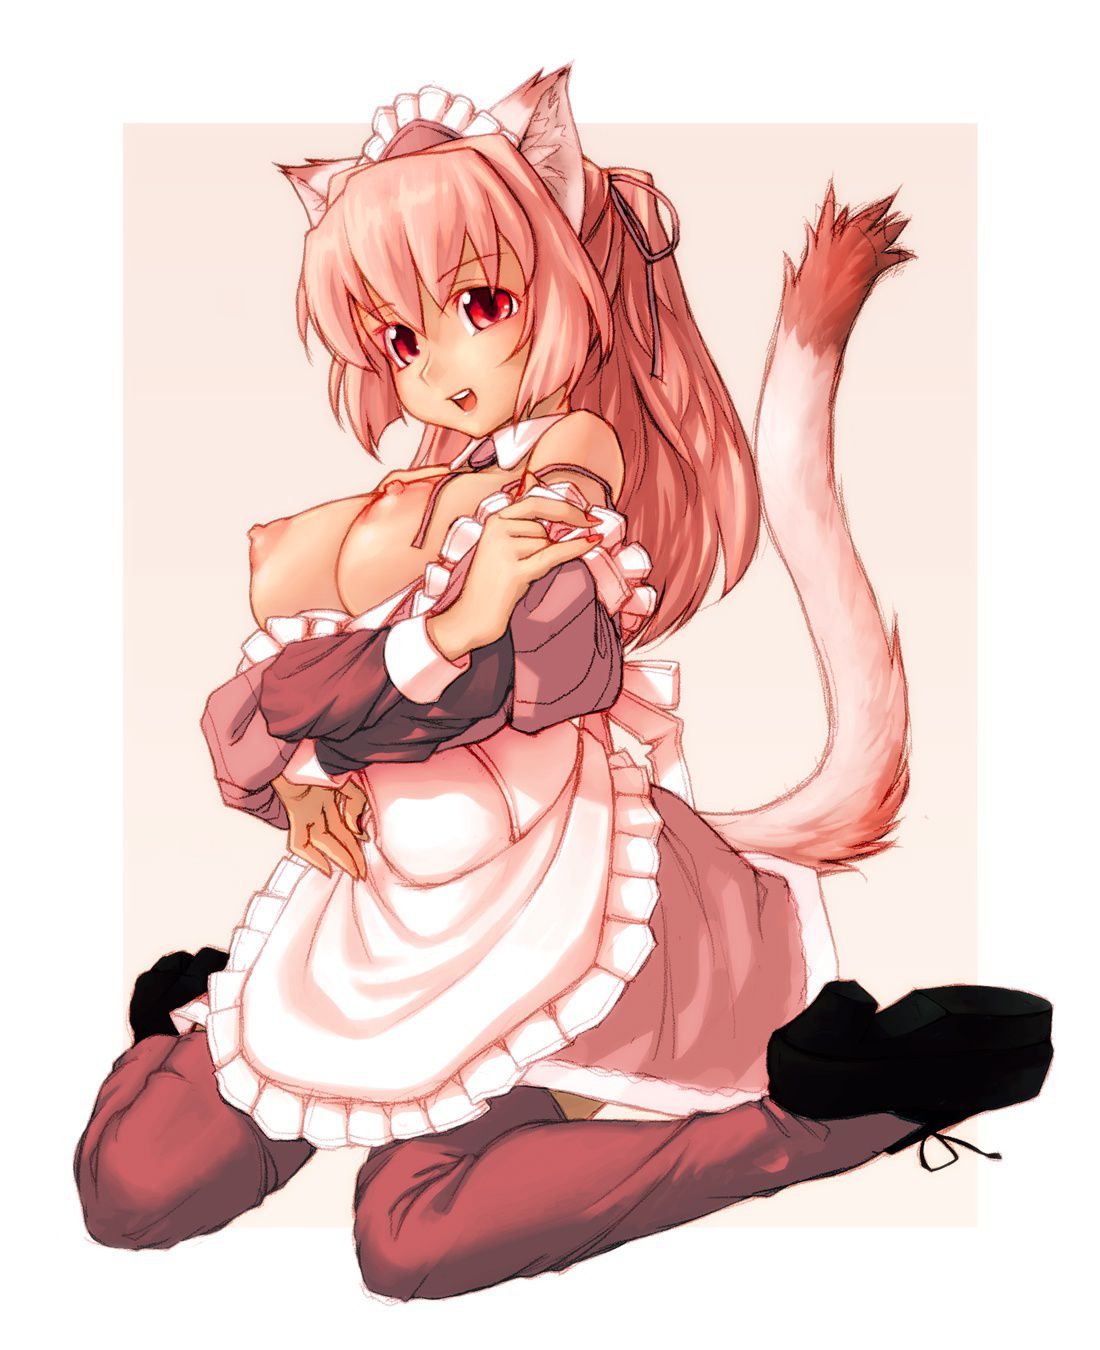 Cute Maid's Service Erotic Image Part 11 14